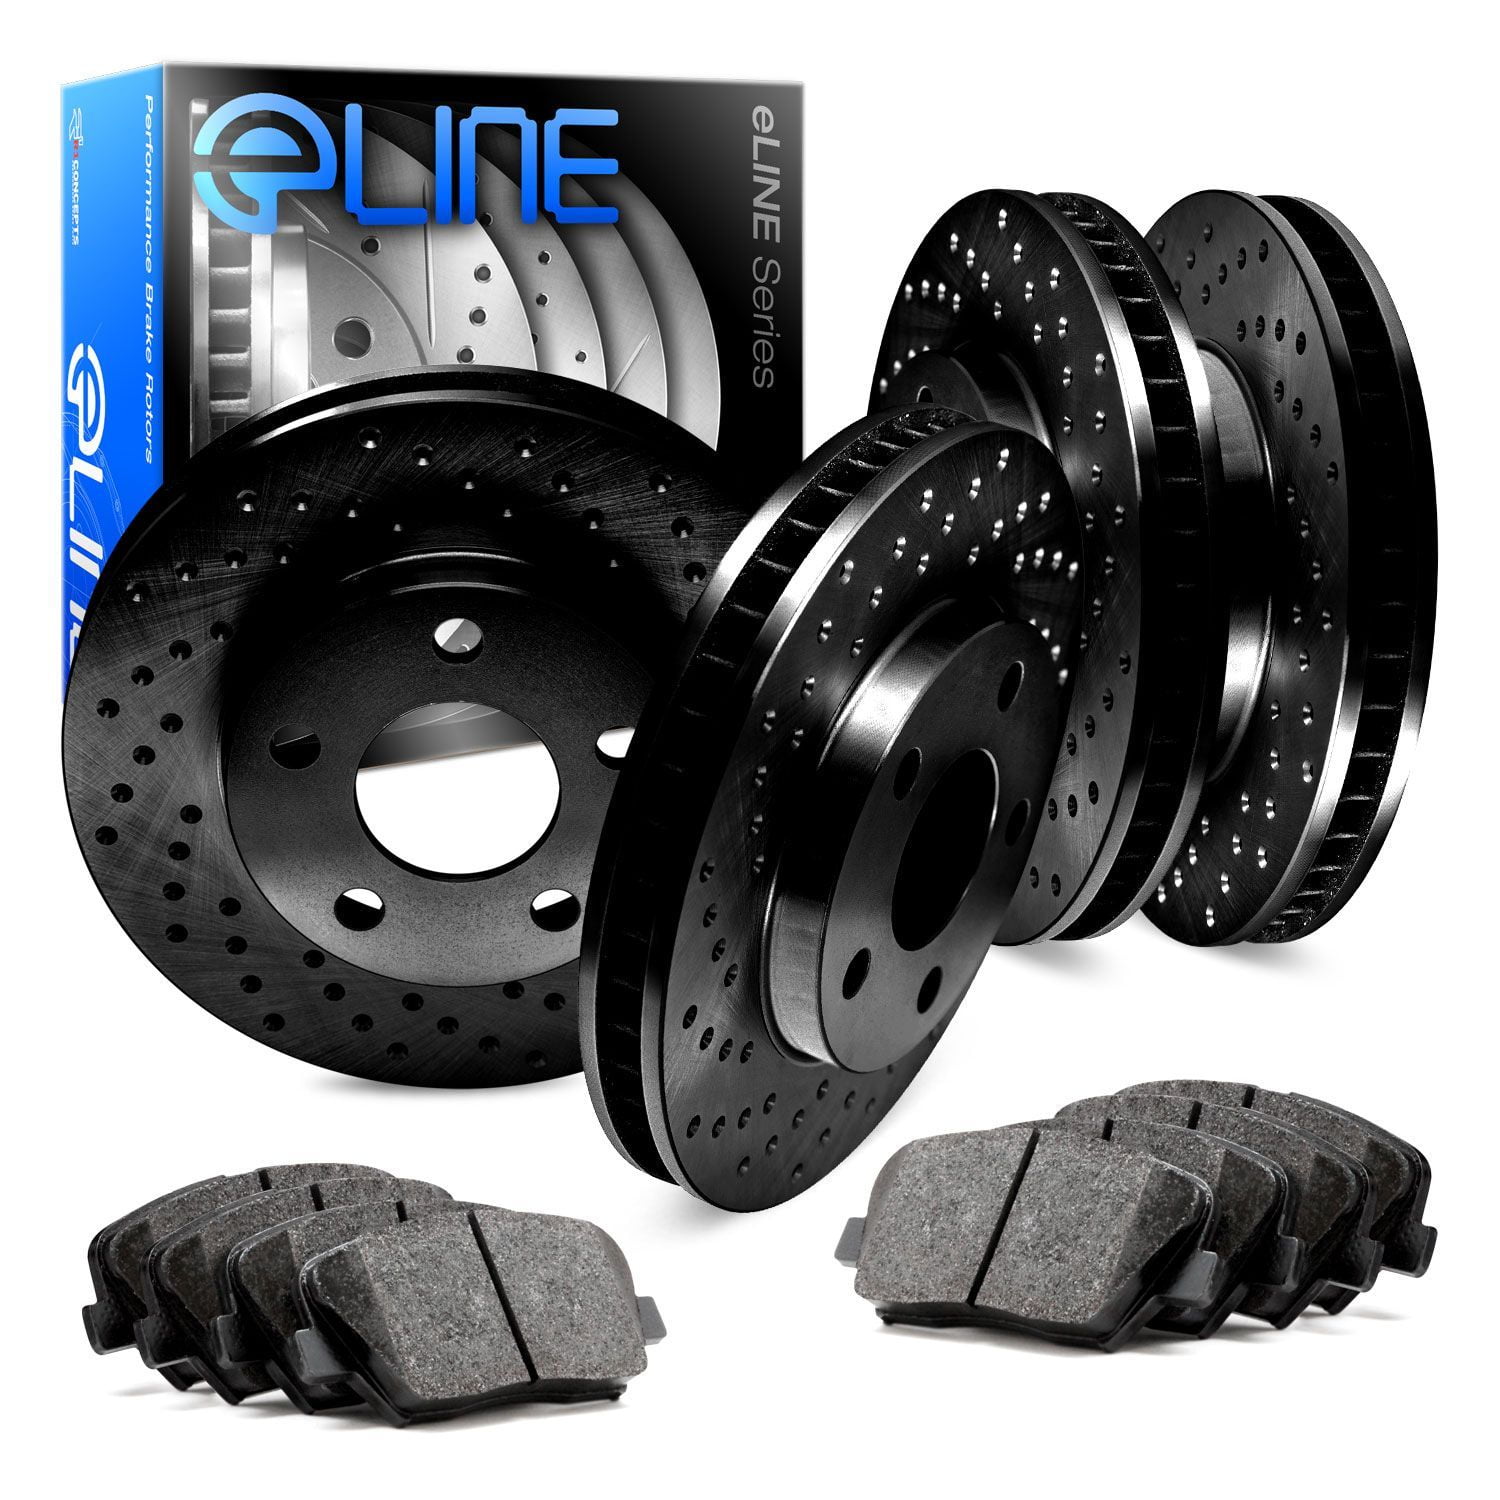 8 Ceramic Pads High-End Front+Rear Kit Fits:- Vibe Matrix 5lug 4 Black Coated Cross-Drilled Disc Brake Rotors